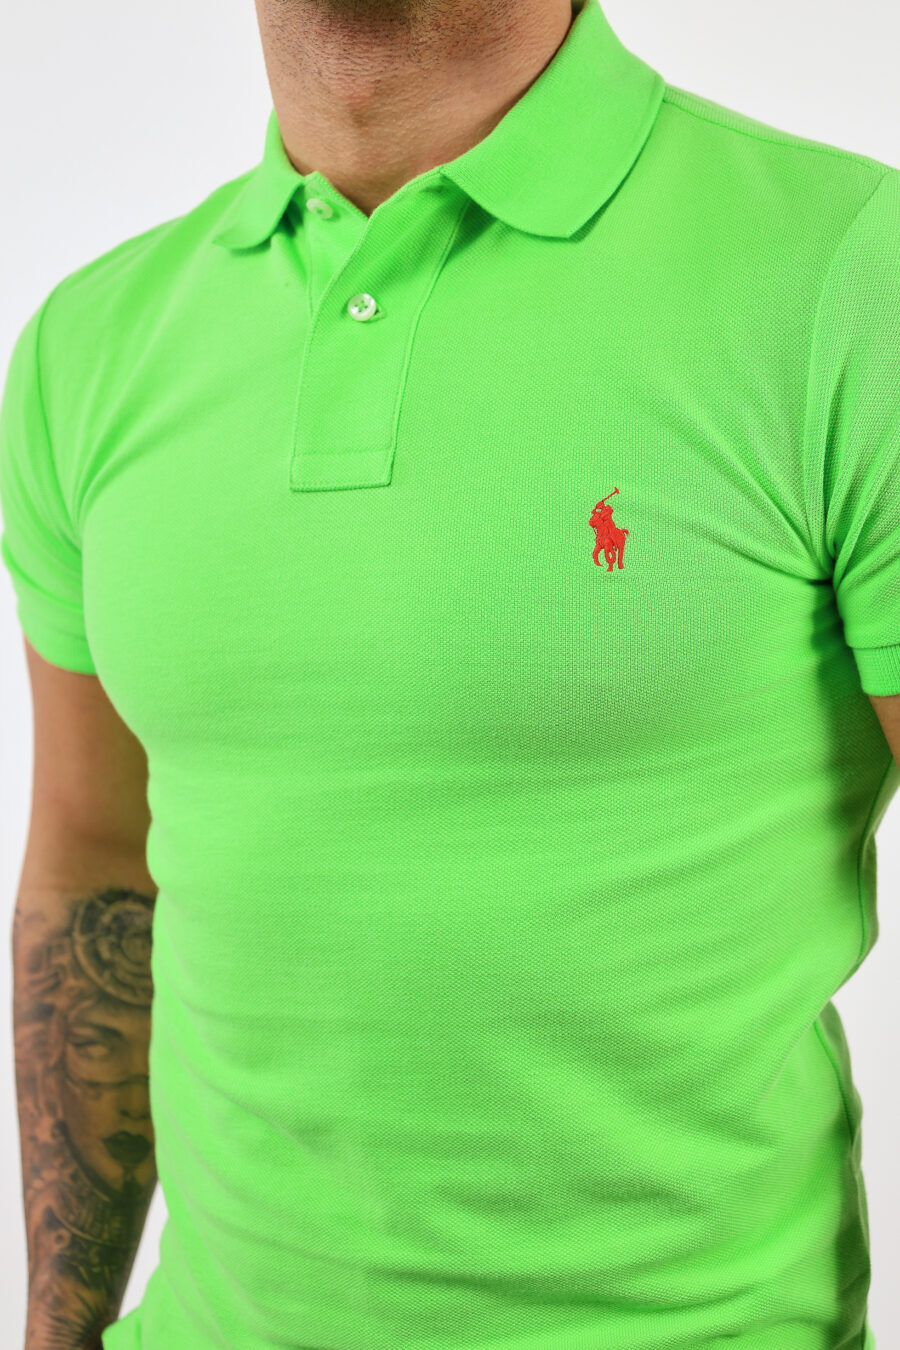 Pólo verde claro com mini logótipo "polo" - BLS Fashion 299 1